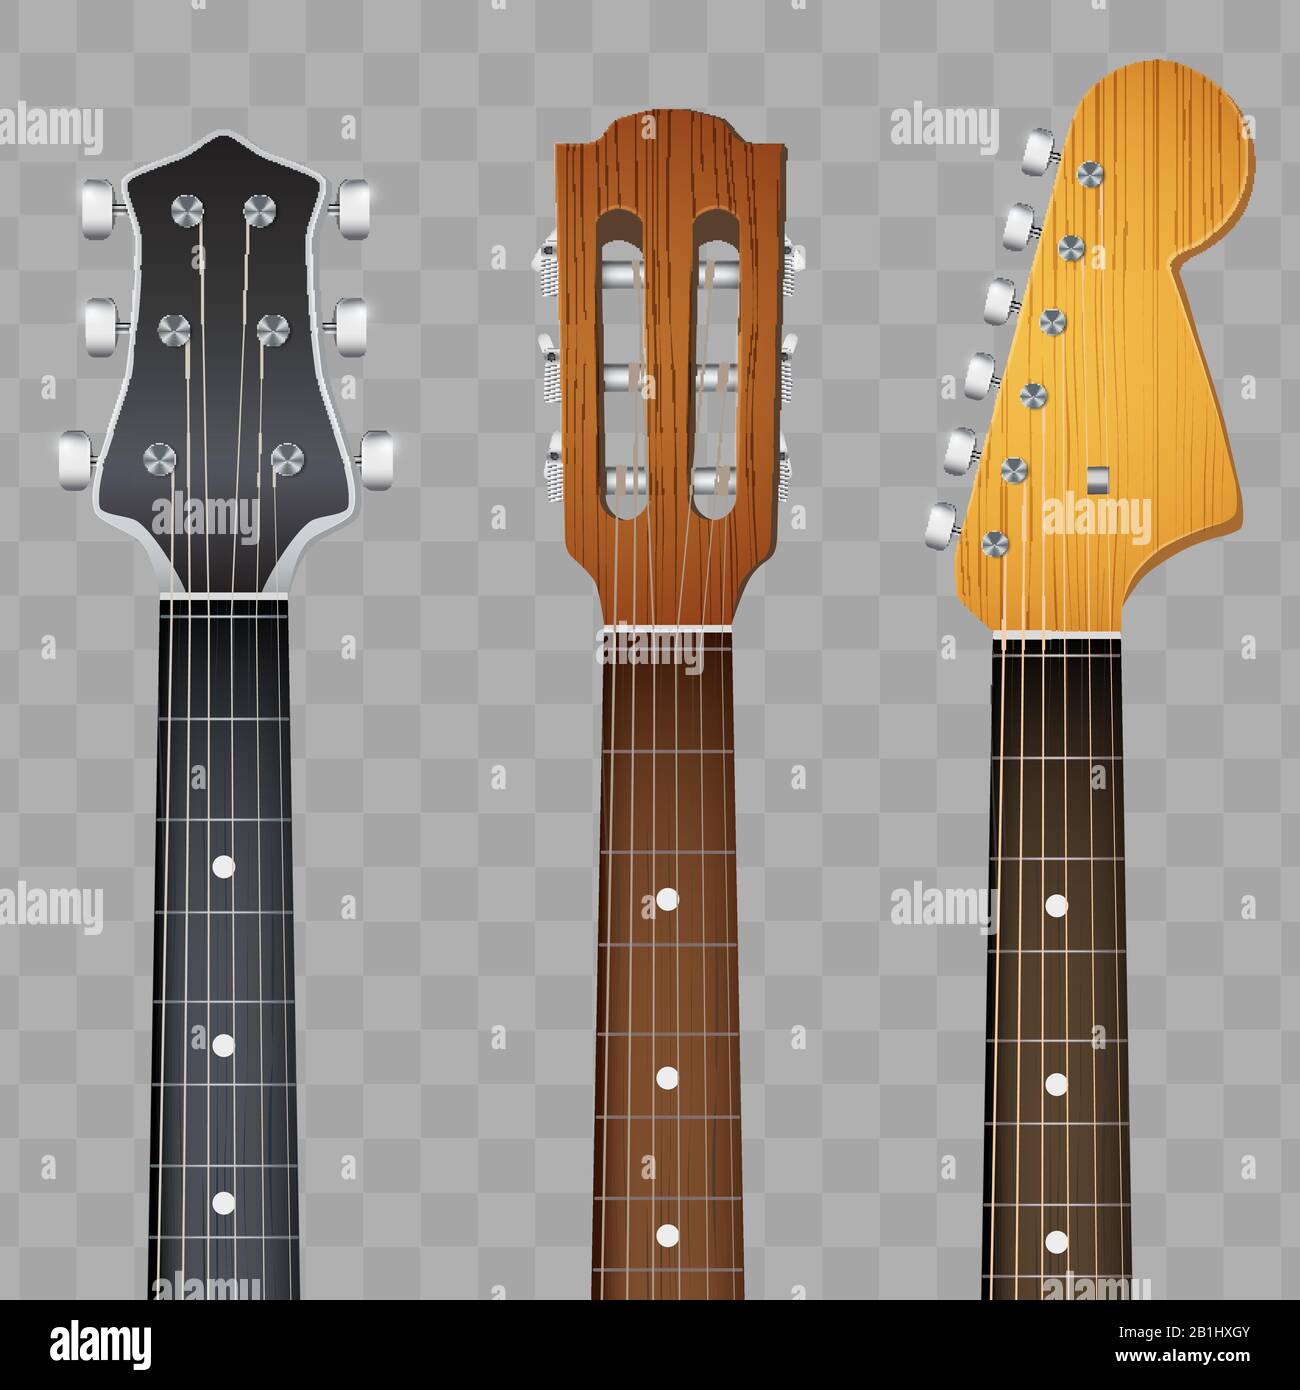 Set of Guitar neck fretboard and headstock Stock Vector